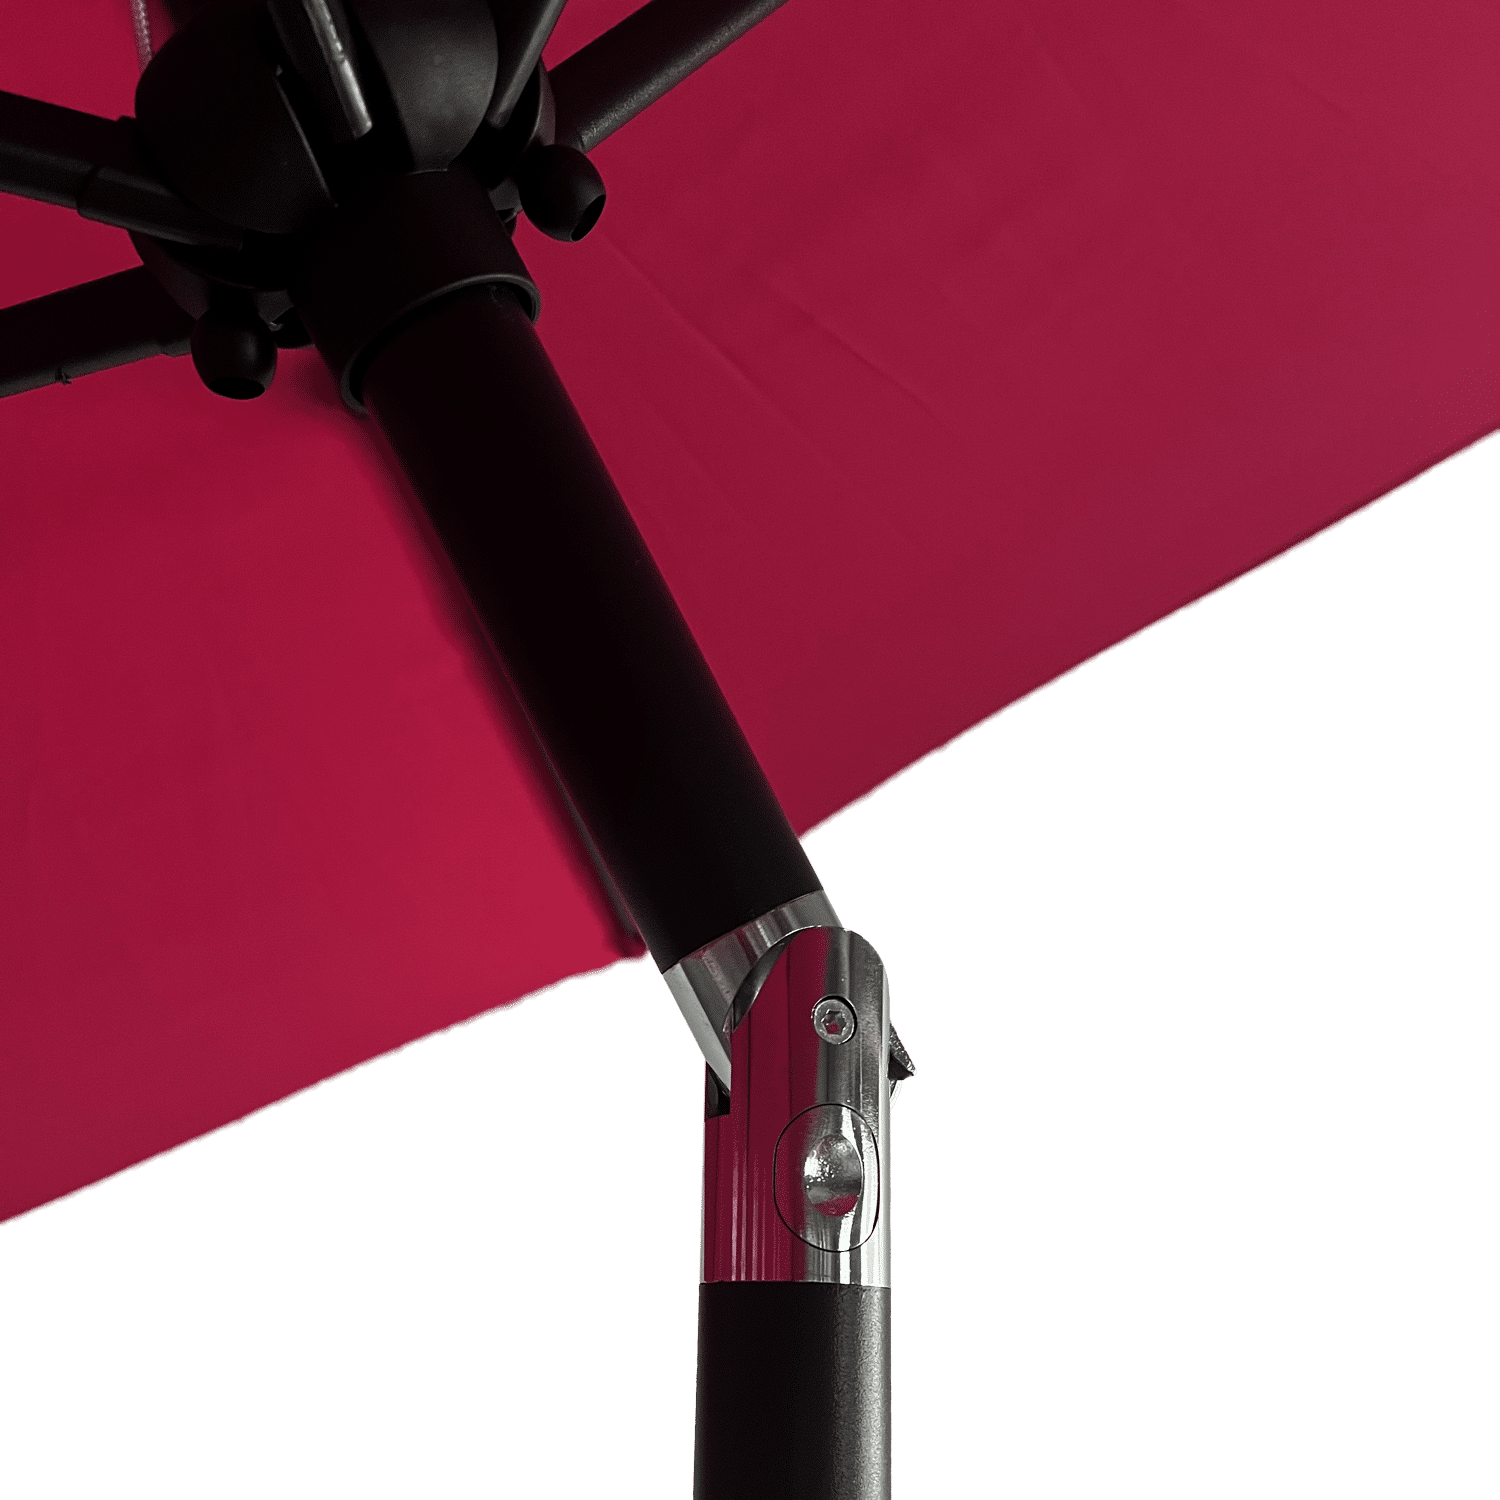  HAPUNA rechte ronde paraplu 2,70m diameter fuchsia